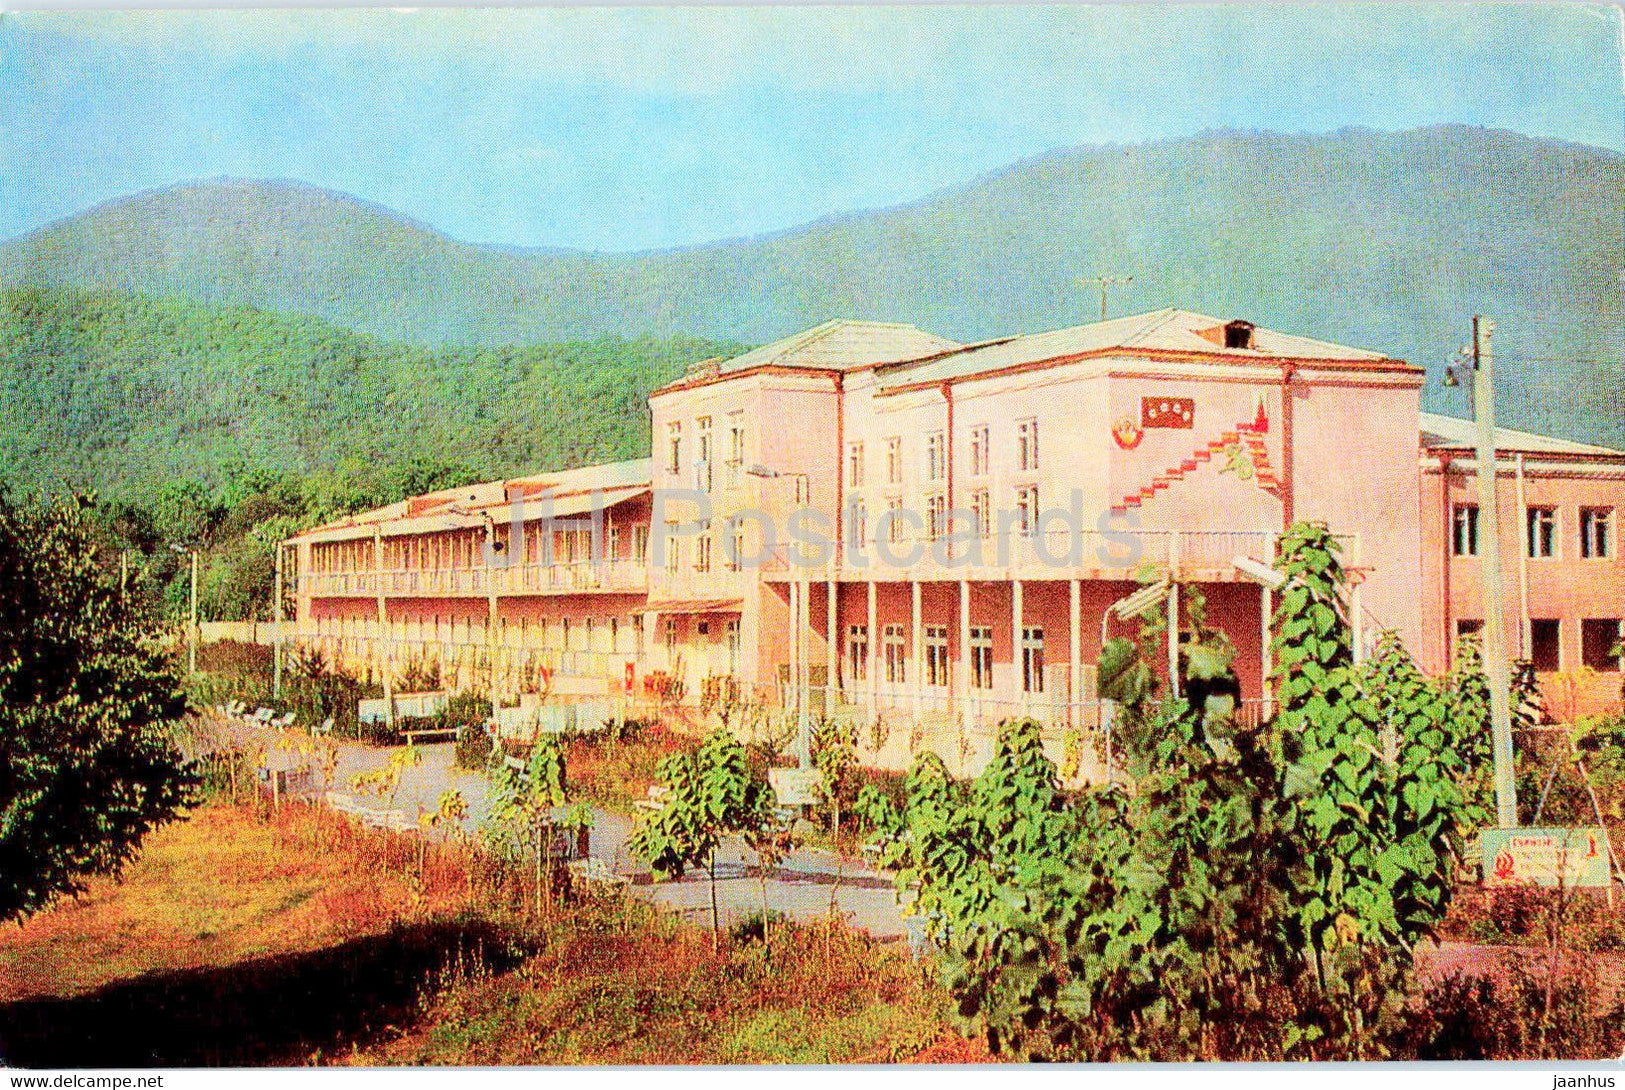 Zaqatala - Zakatala - Zakataly - Tourist Base - 1976 - Azerbaijan USSR - unused - JH Postcards